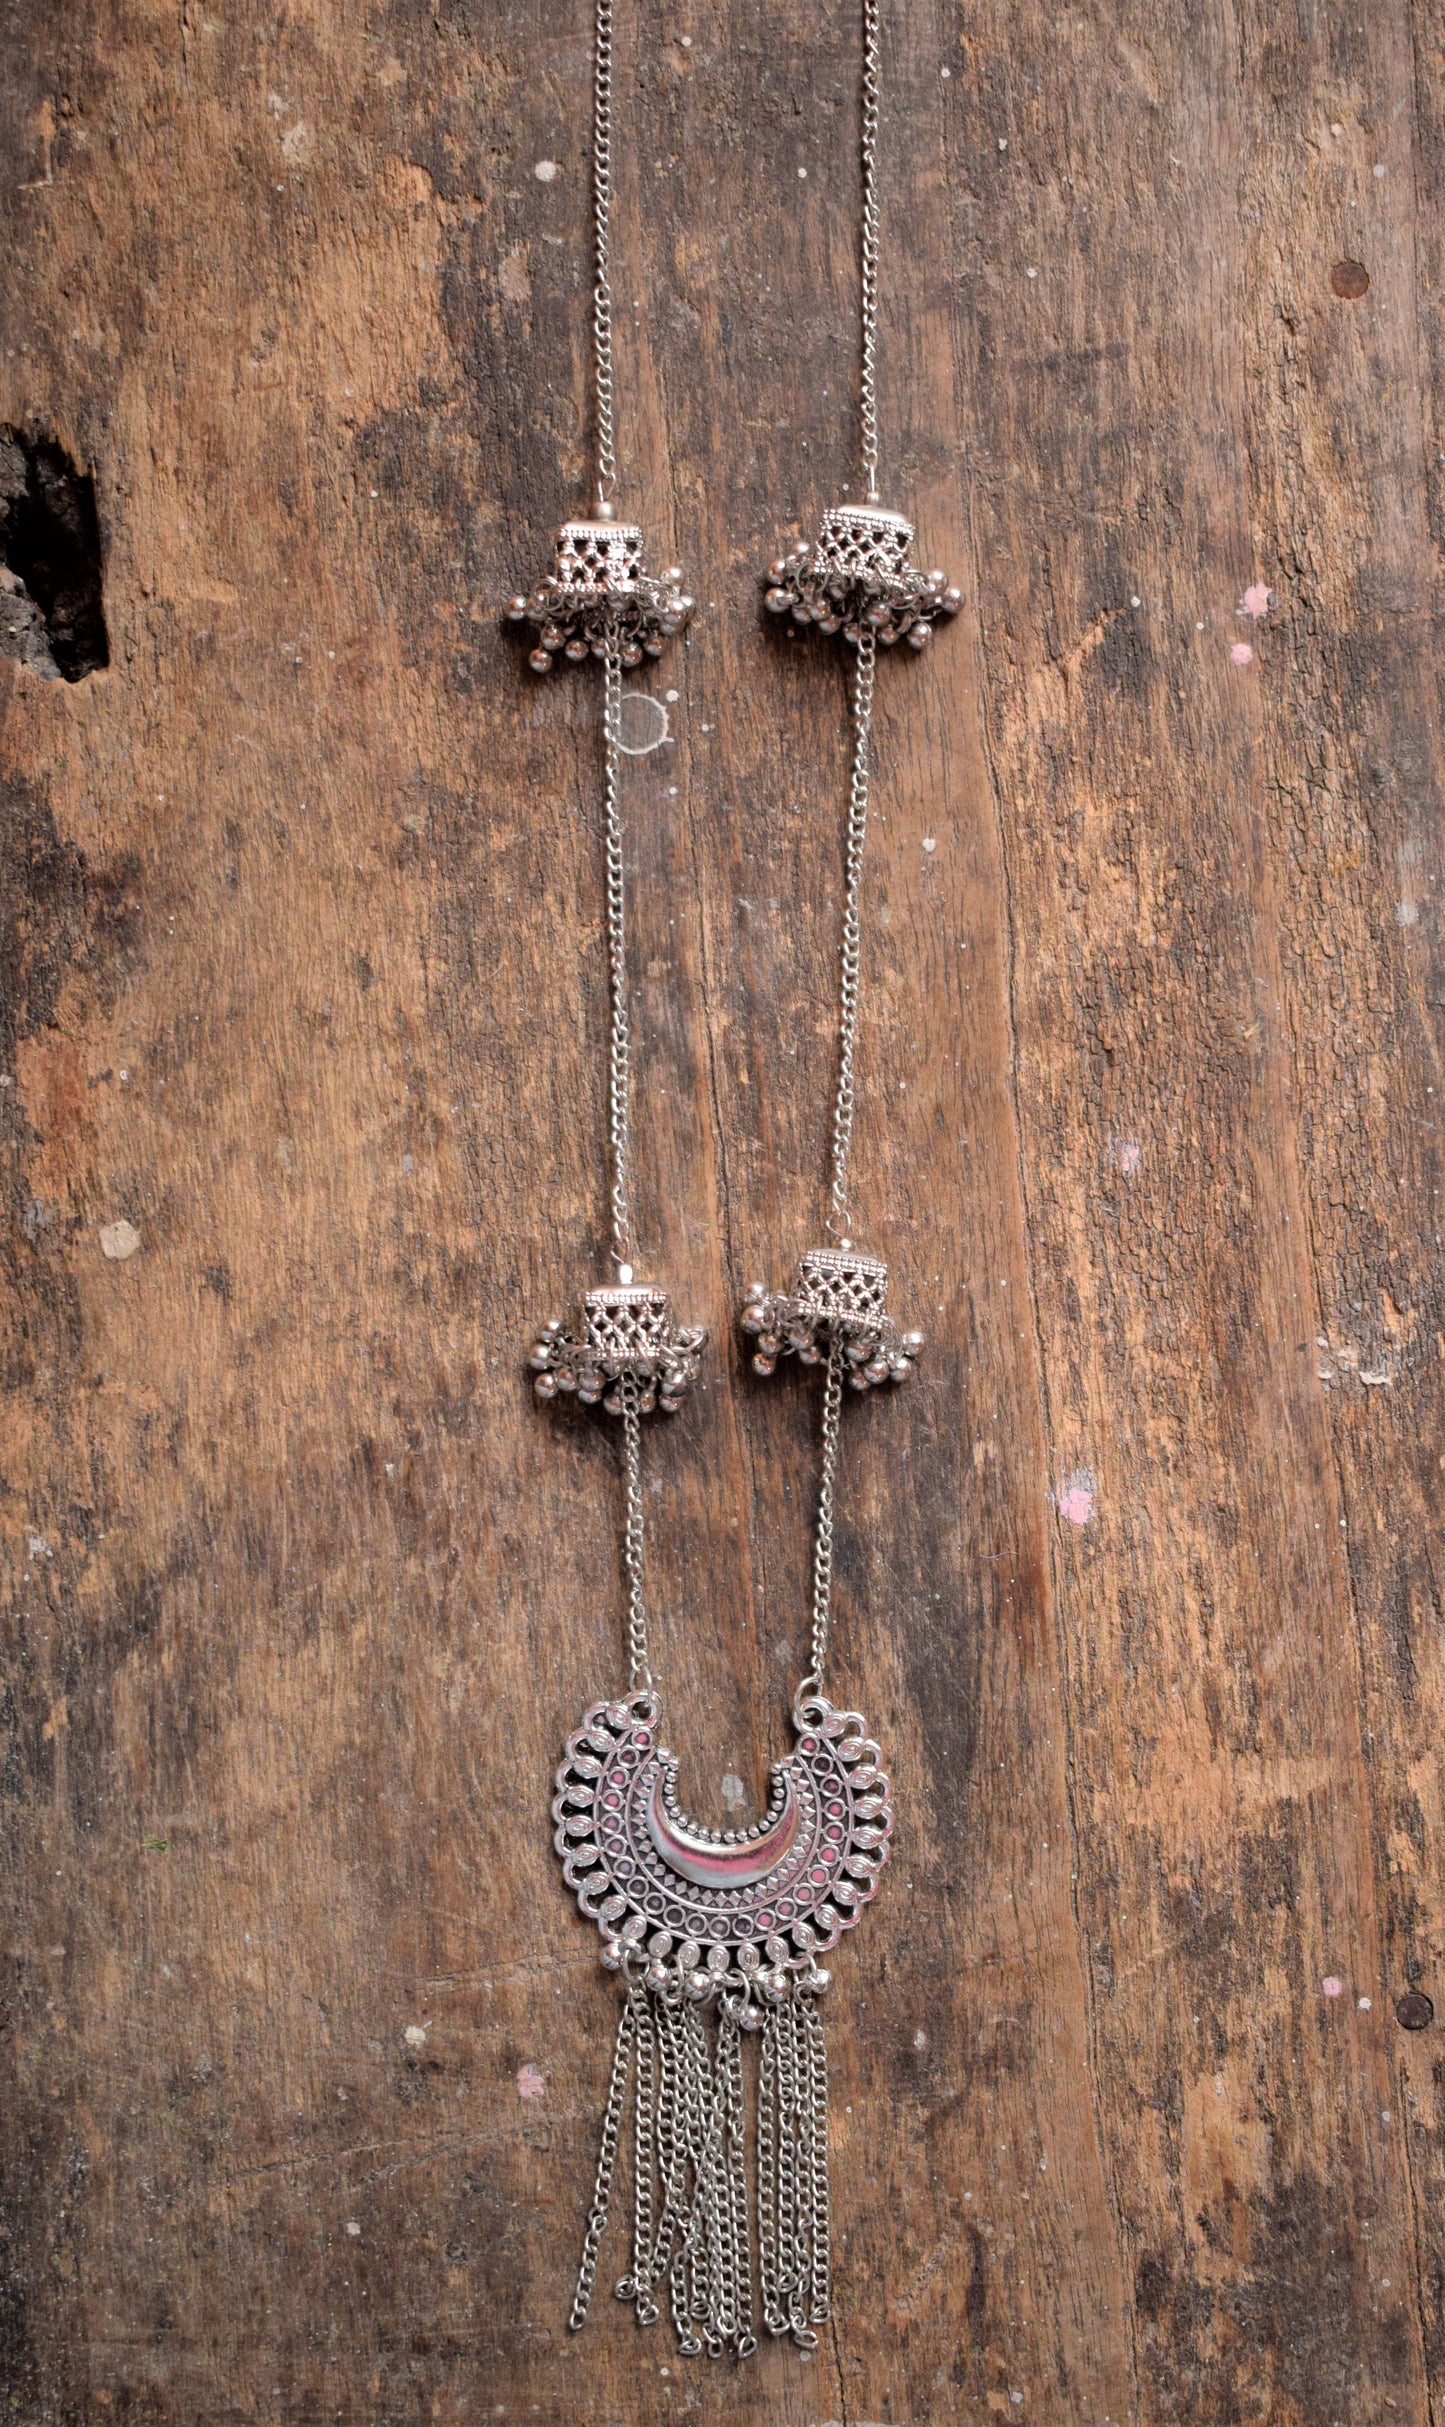 Chandbali Pendant Necklace with Jhumki